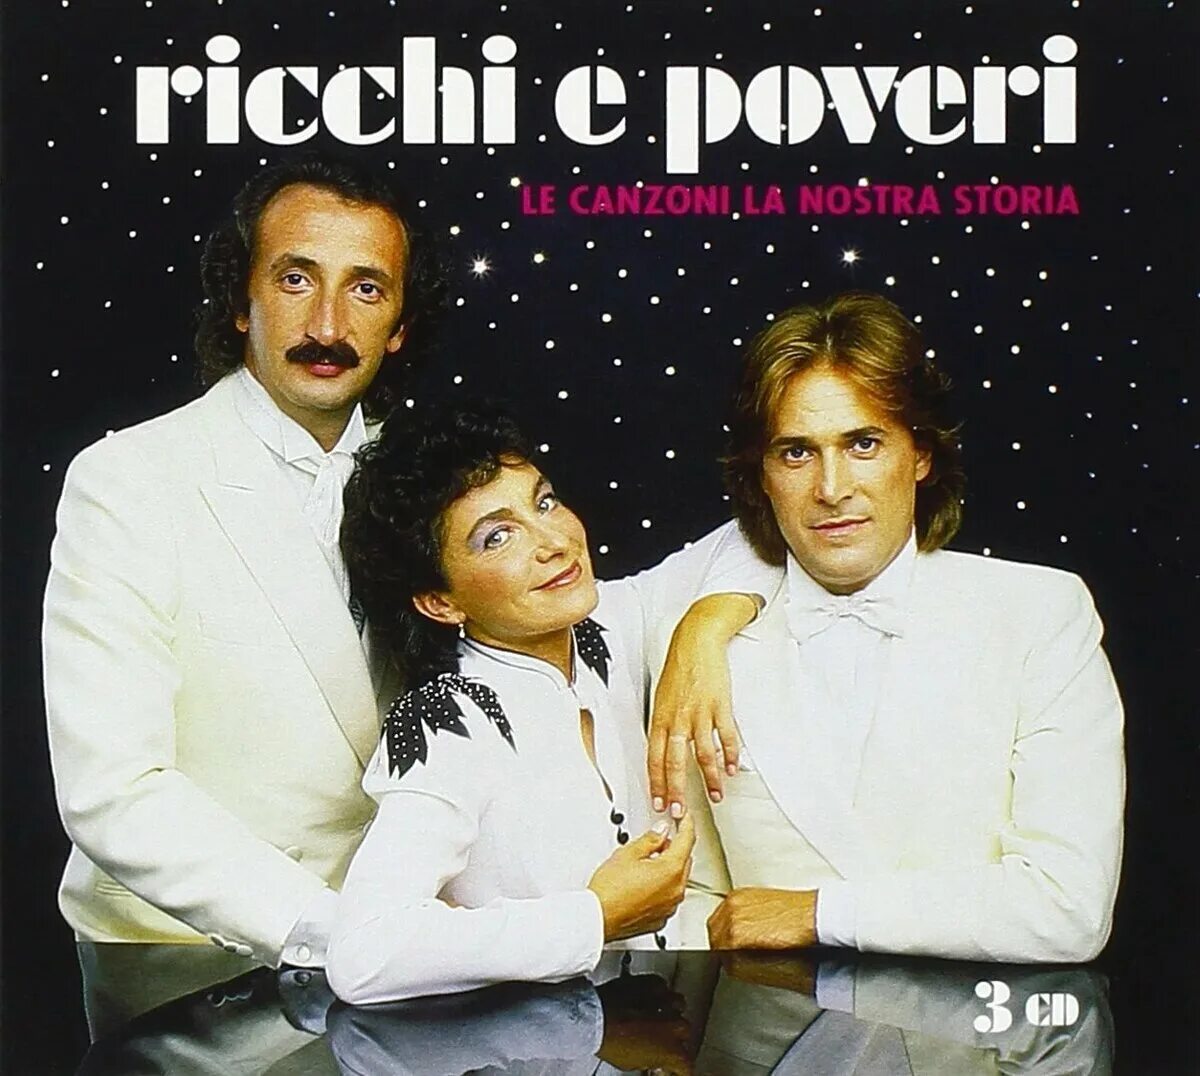 Группа Ricchi e Poveri. Группа Ricchi e Poveri сейчас. Группа Рики и повери. Итальянская группа Рикки и повери.